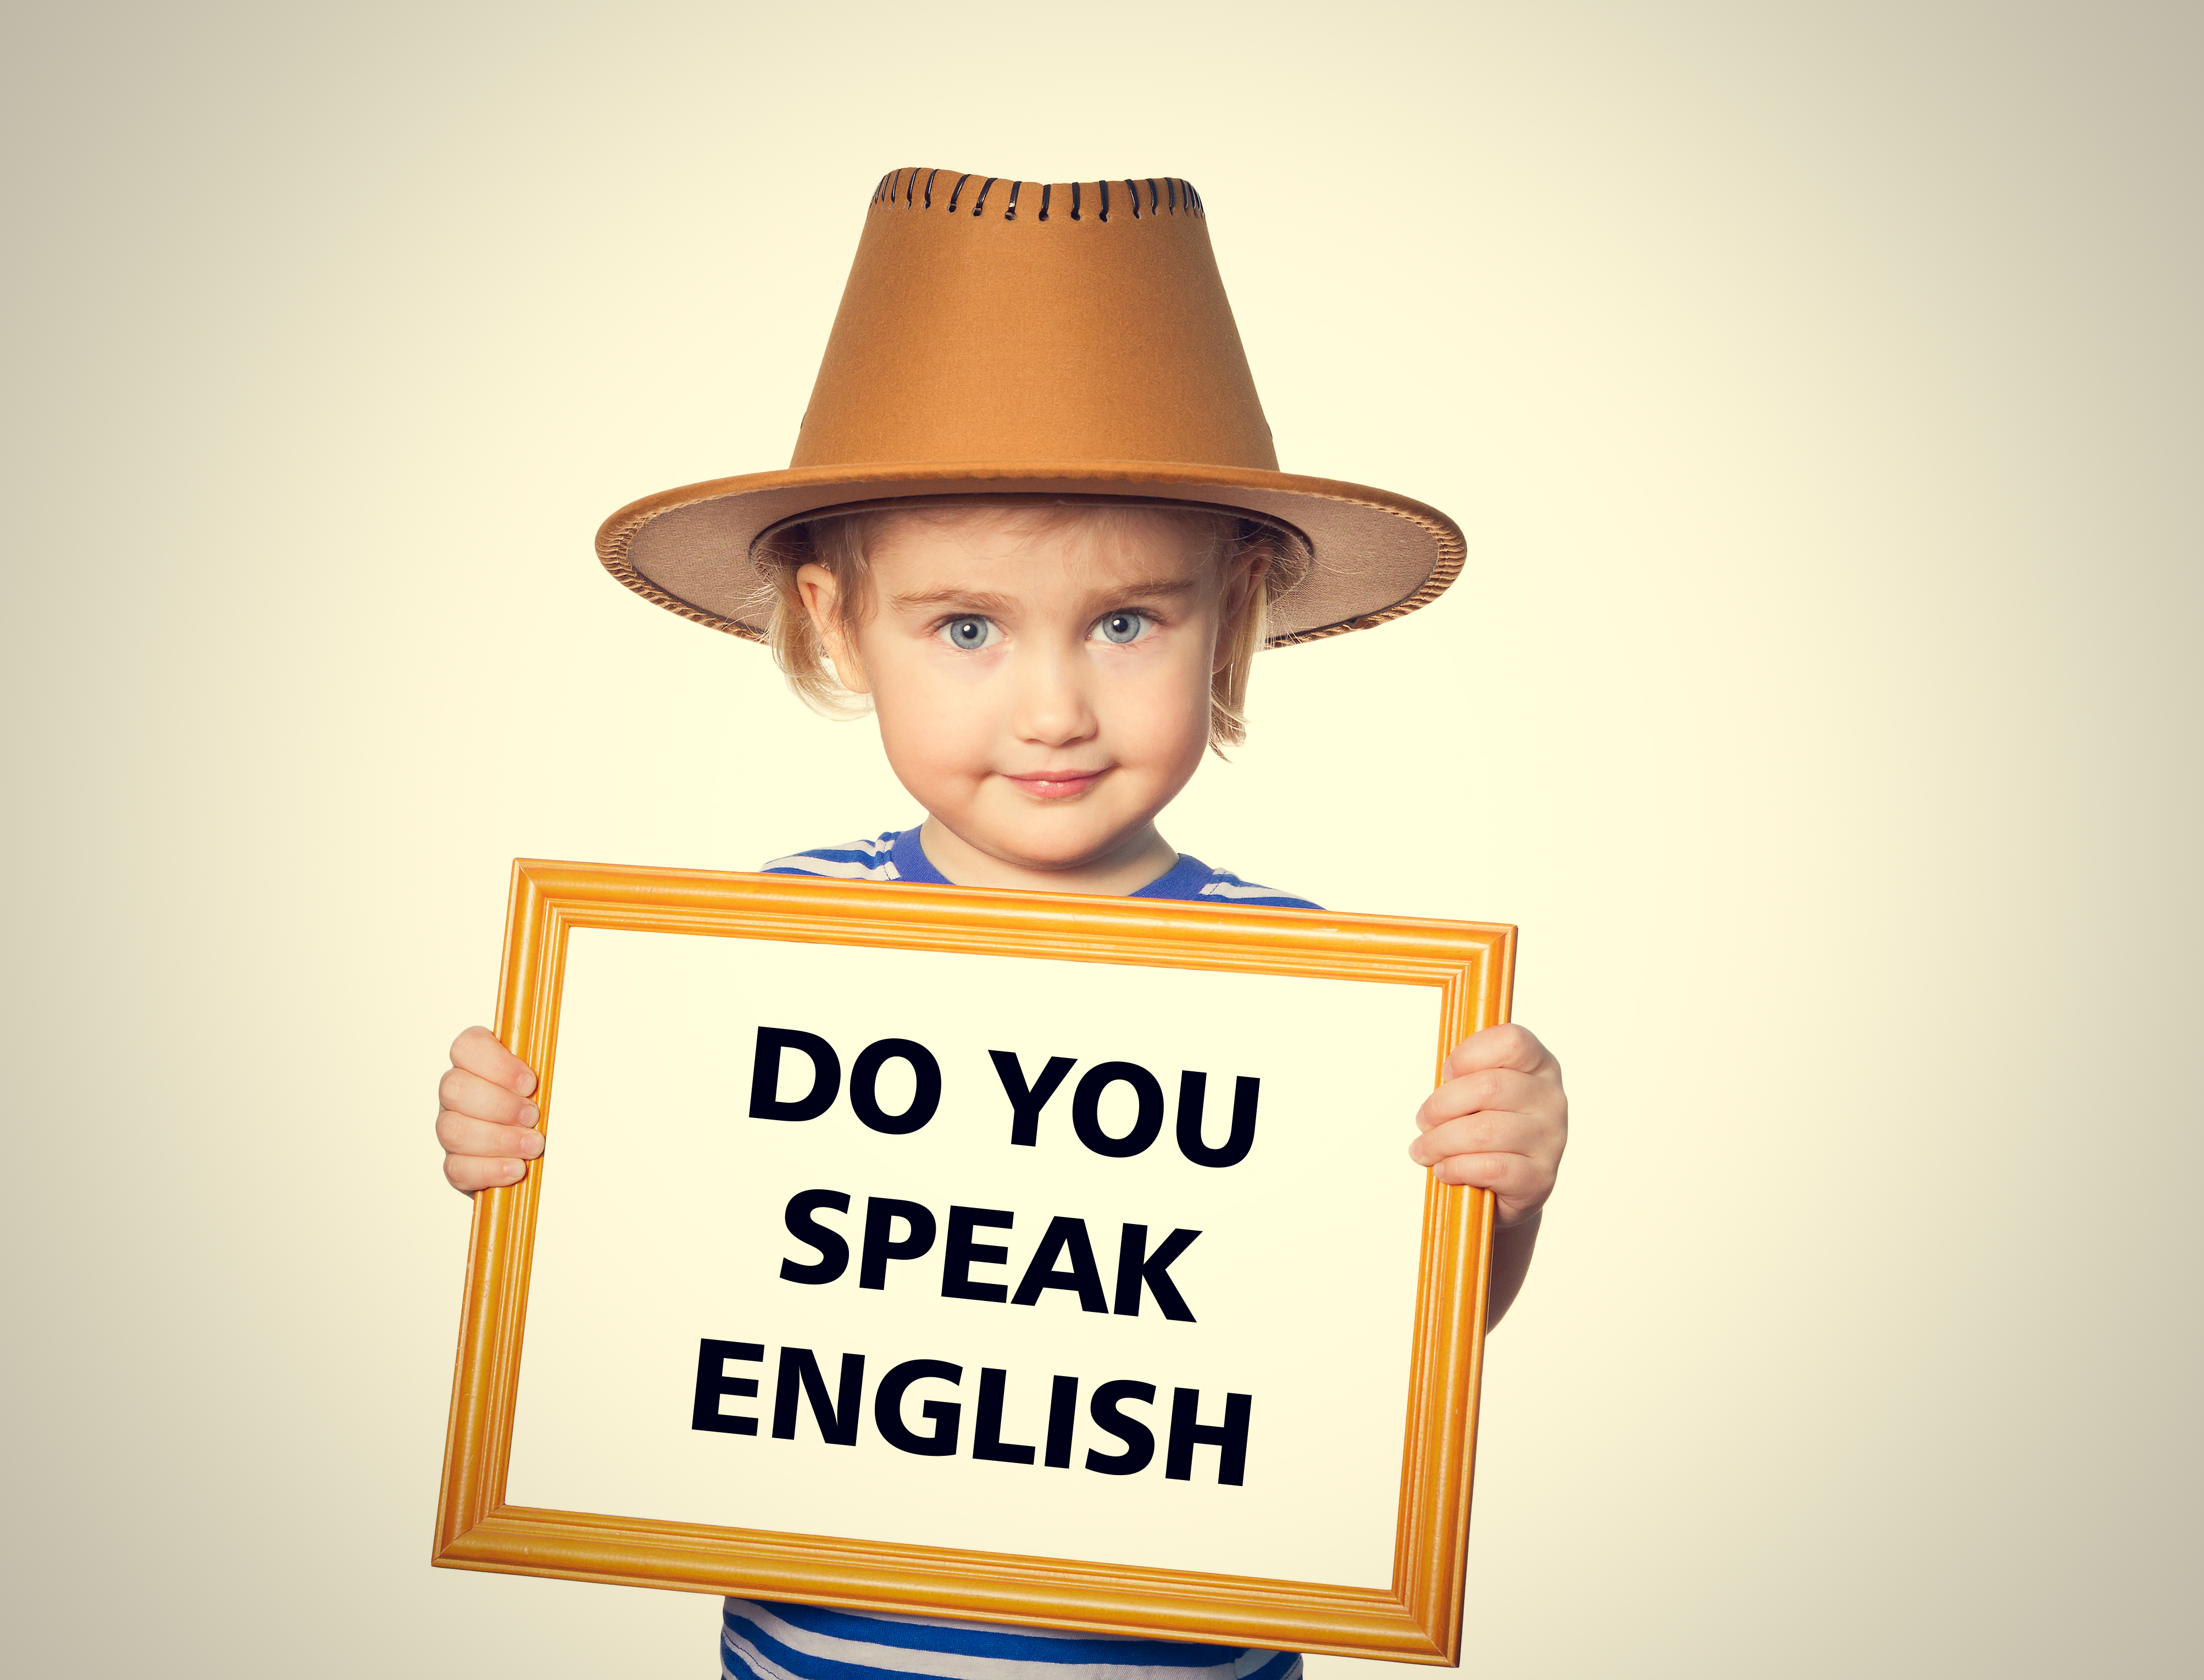 Do you speak english with me. Английский язык для детей. Speak English фото. Ребенок говорит на английском. Дети учат английский.